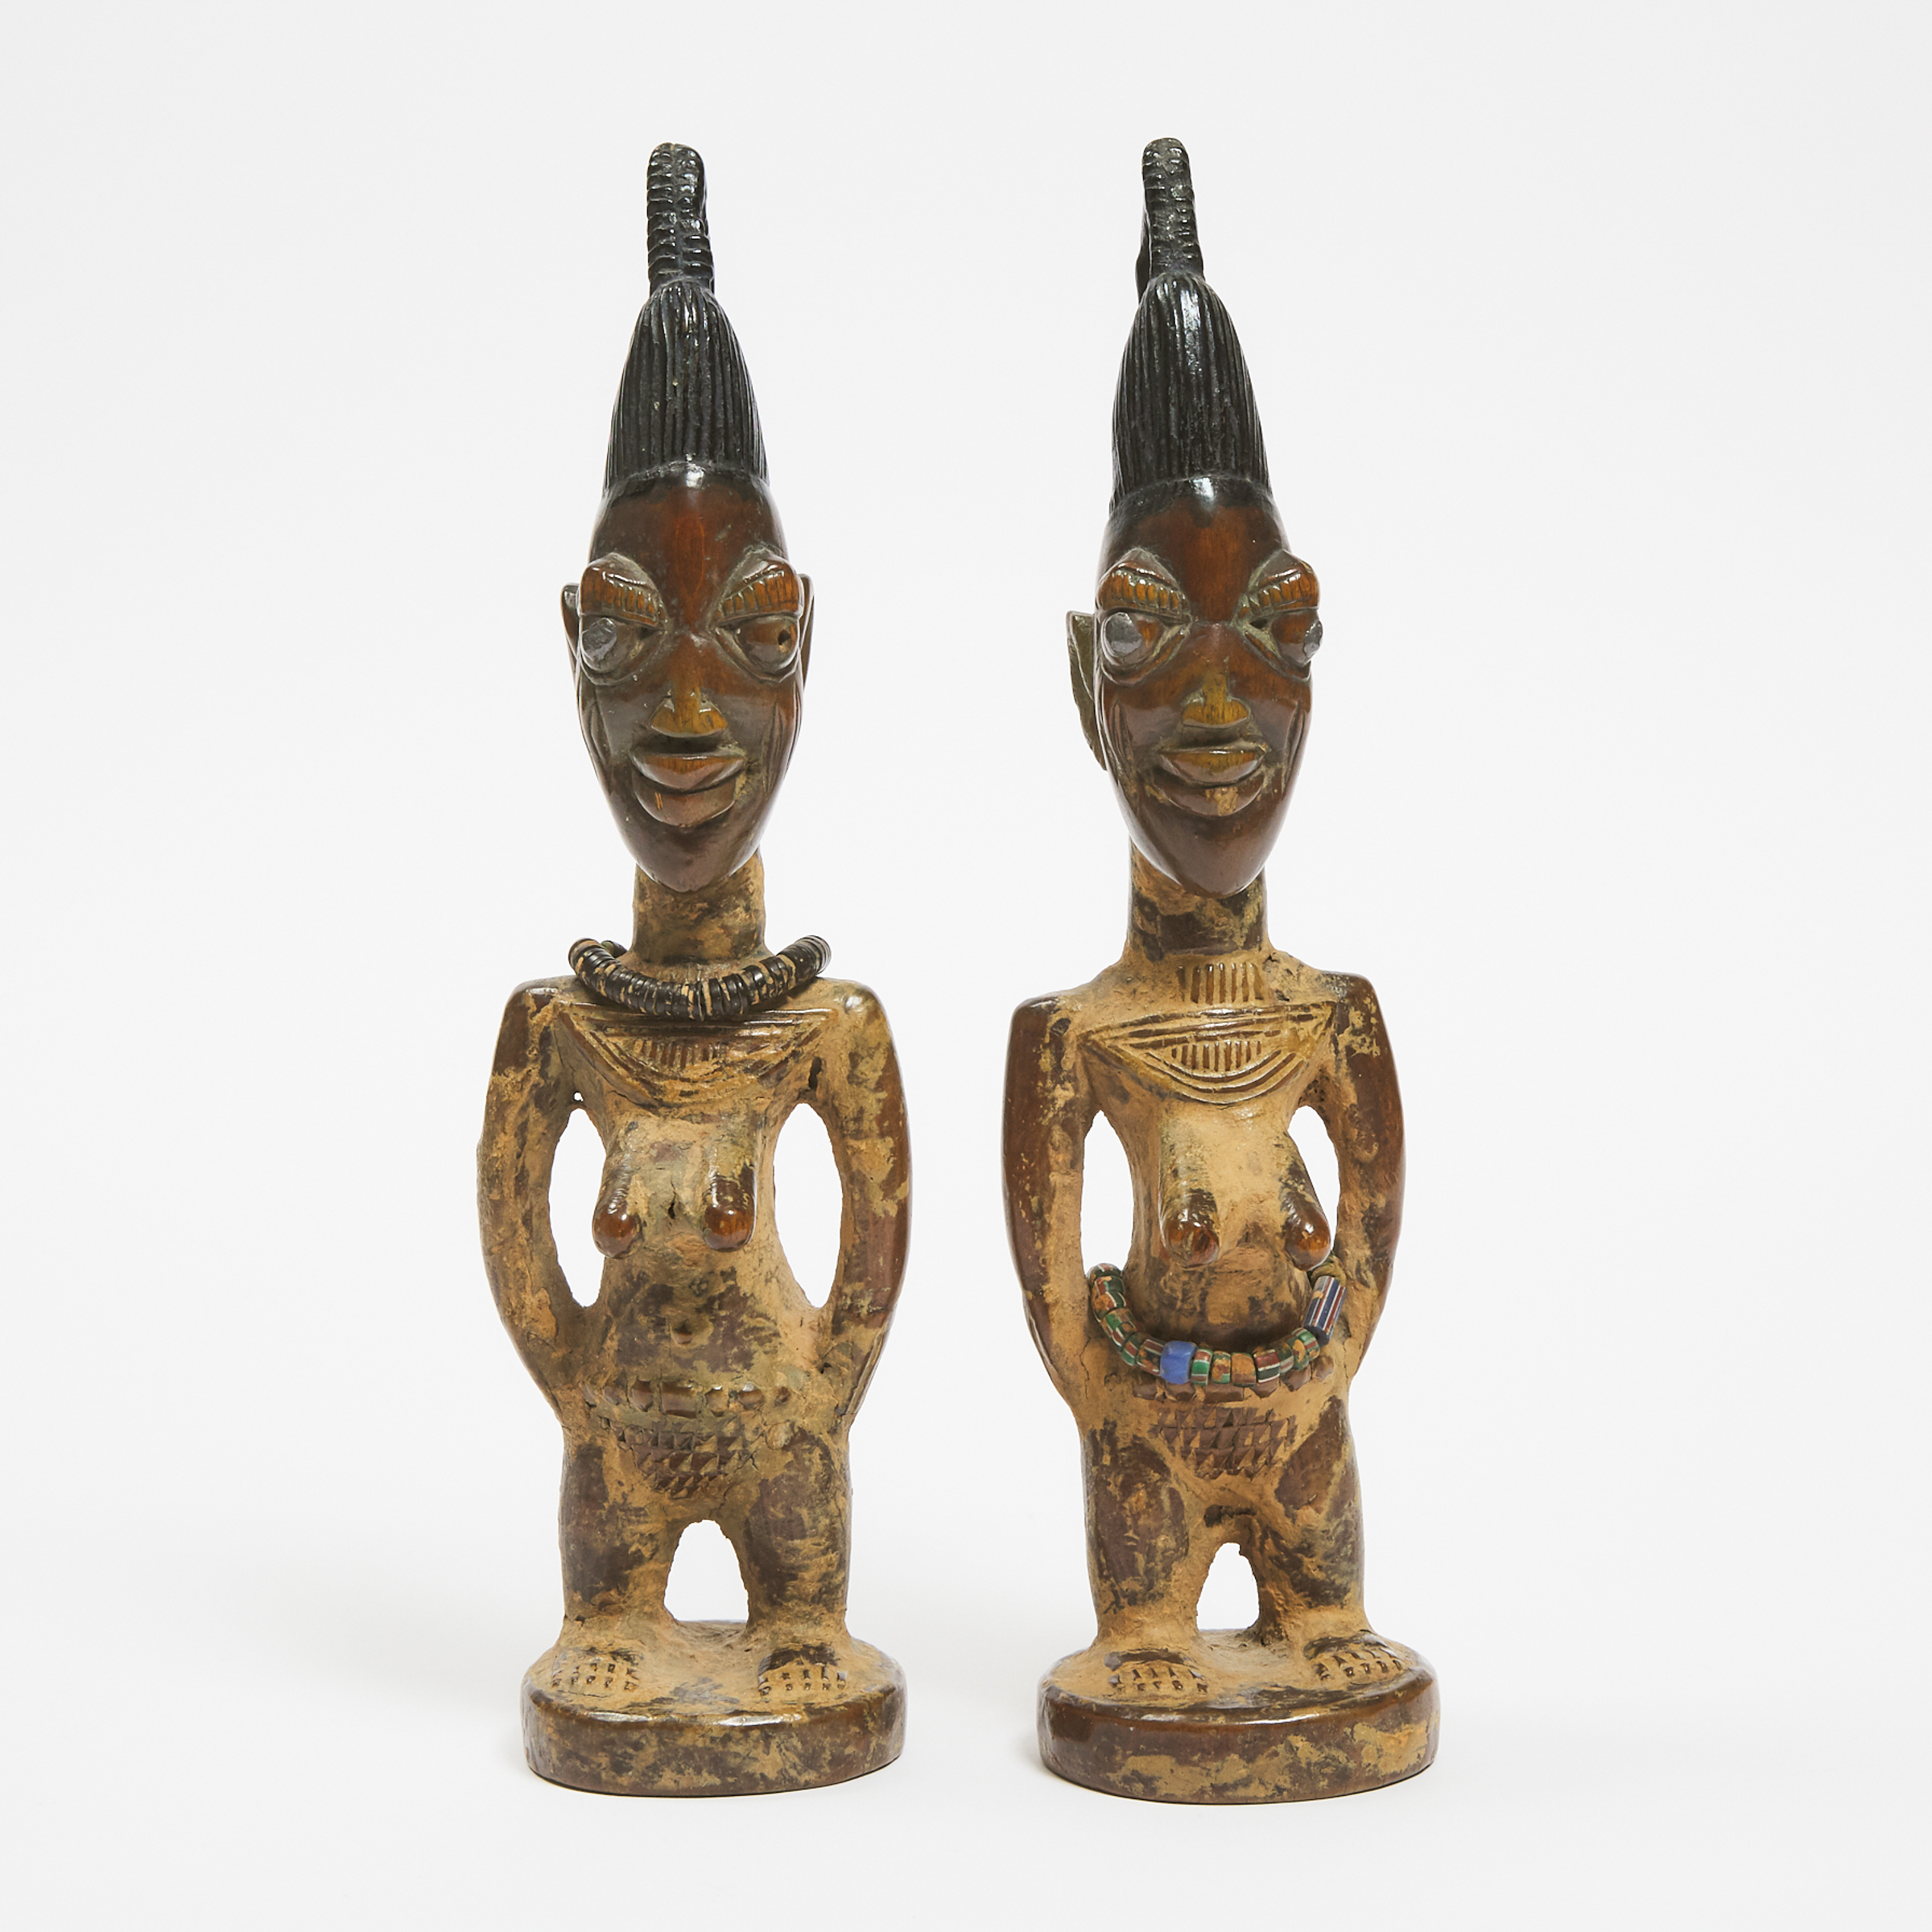 Pair of Yoruba Female Ibeji Twin Figures, Ila Orangun Region, Nigeria, West Africa, early to mid 20th century